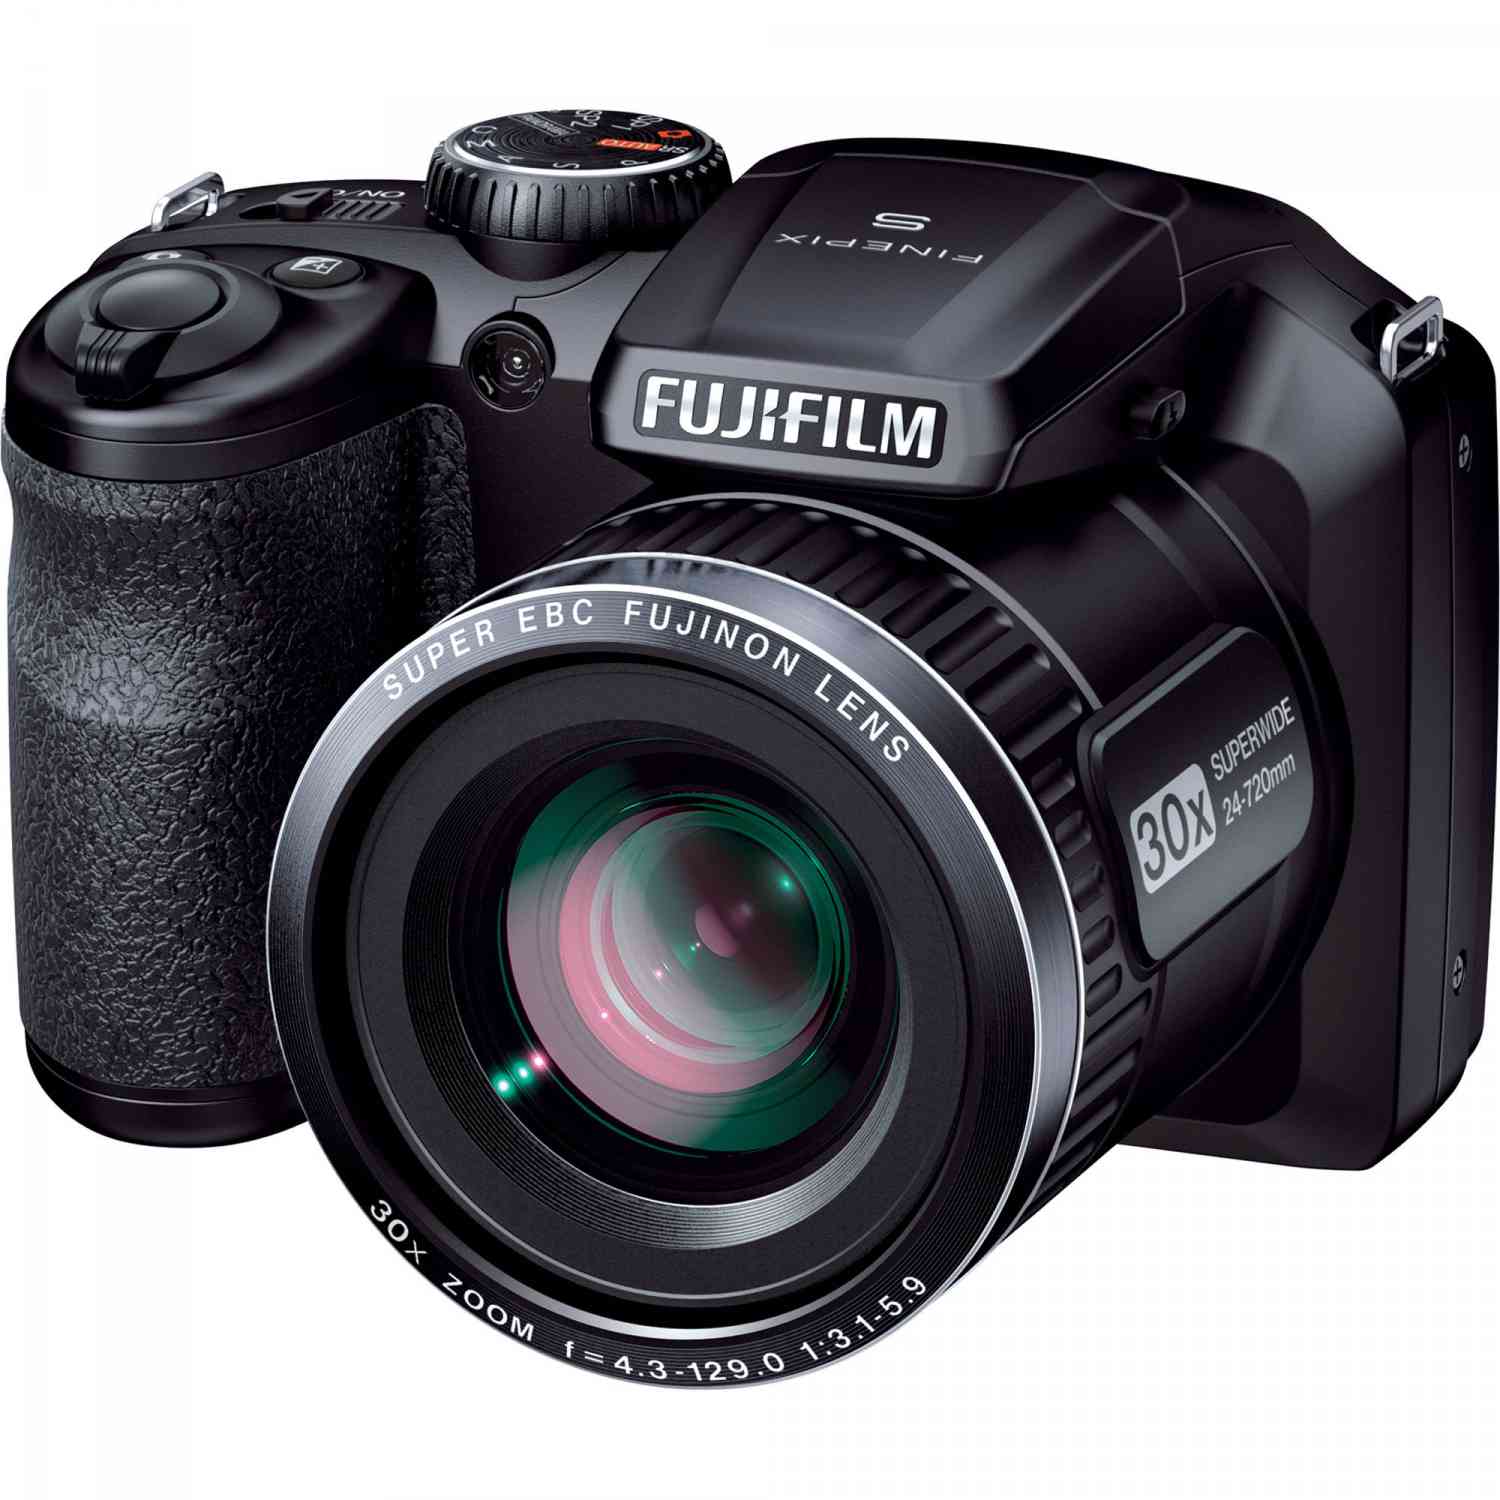 Fujifilm-FinePix-S4800-Digital-Camera best price bd